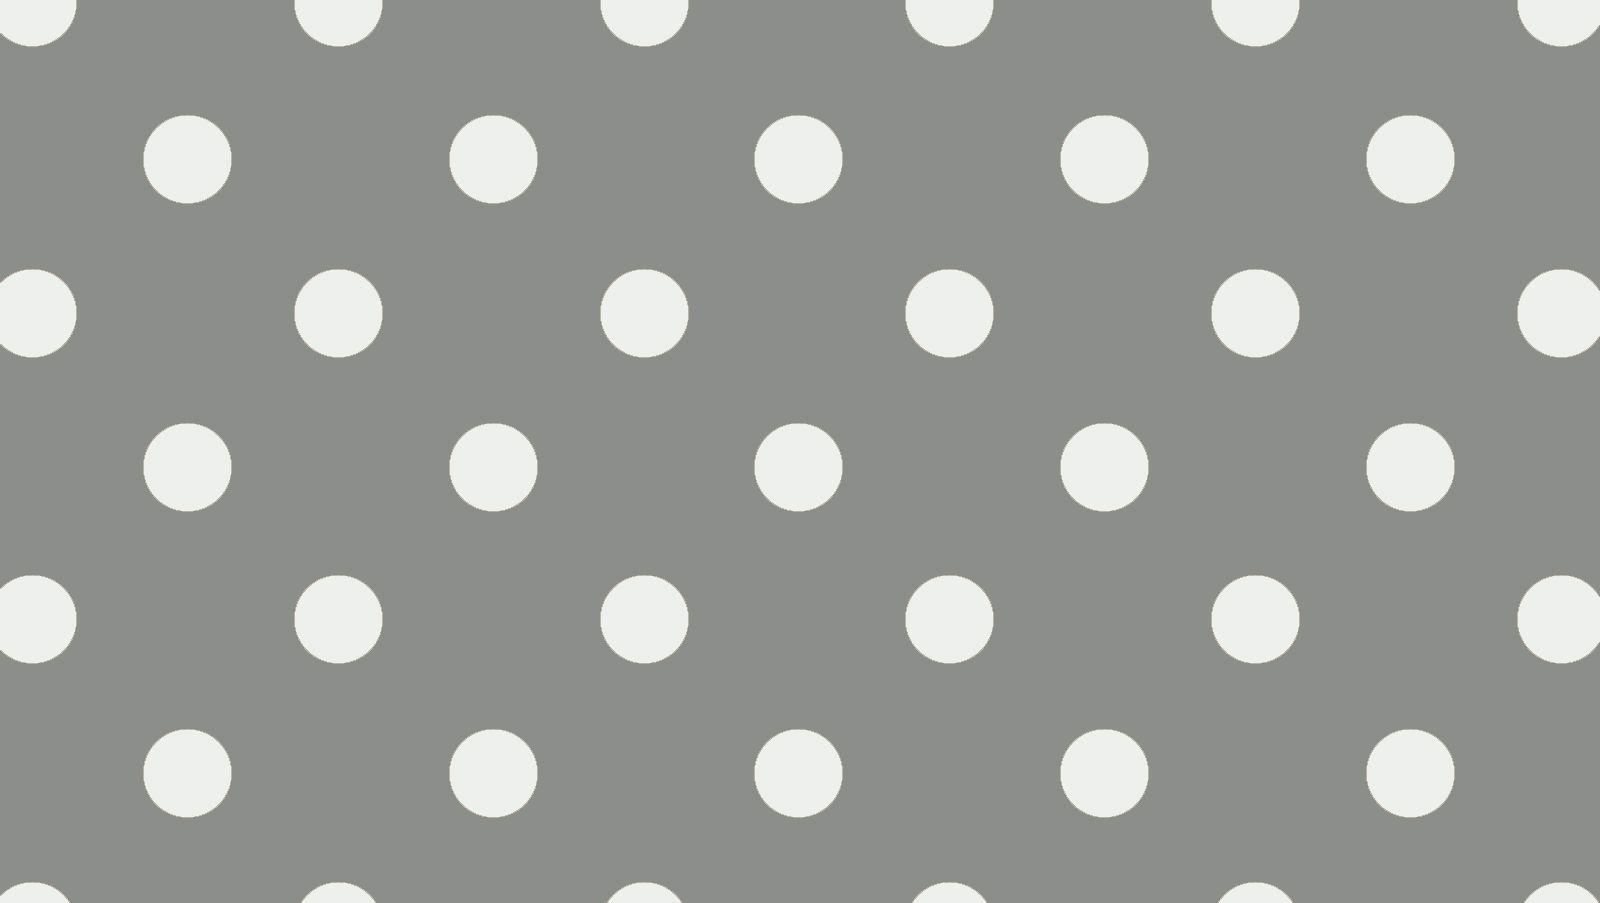 Polka Dot Phone Wallpapers - Top Free Polka Dot Phone Backgrounds ...